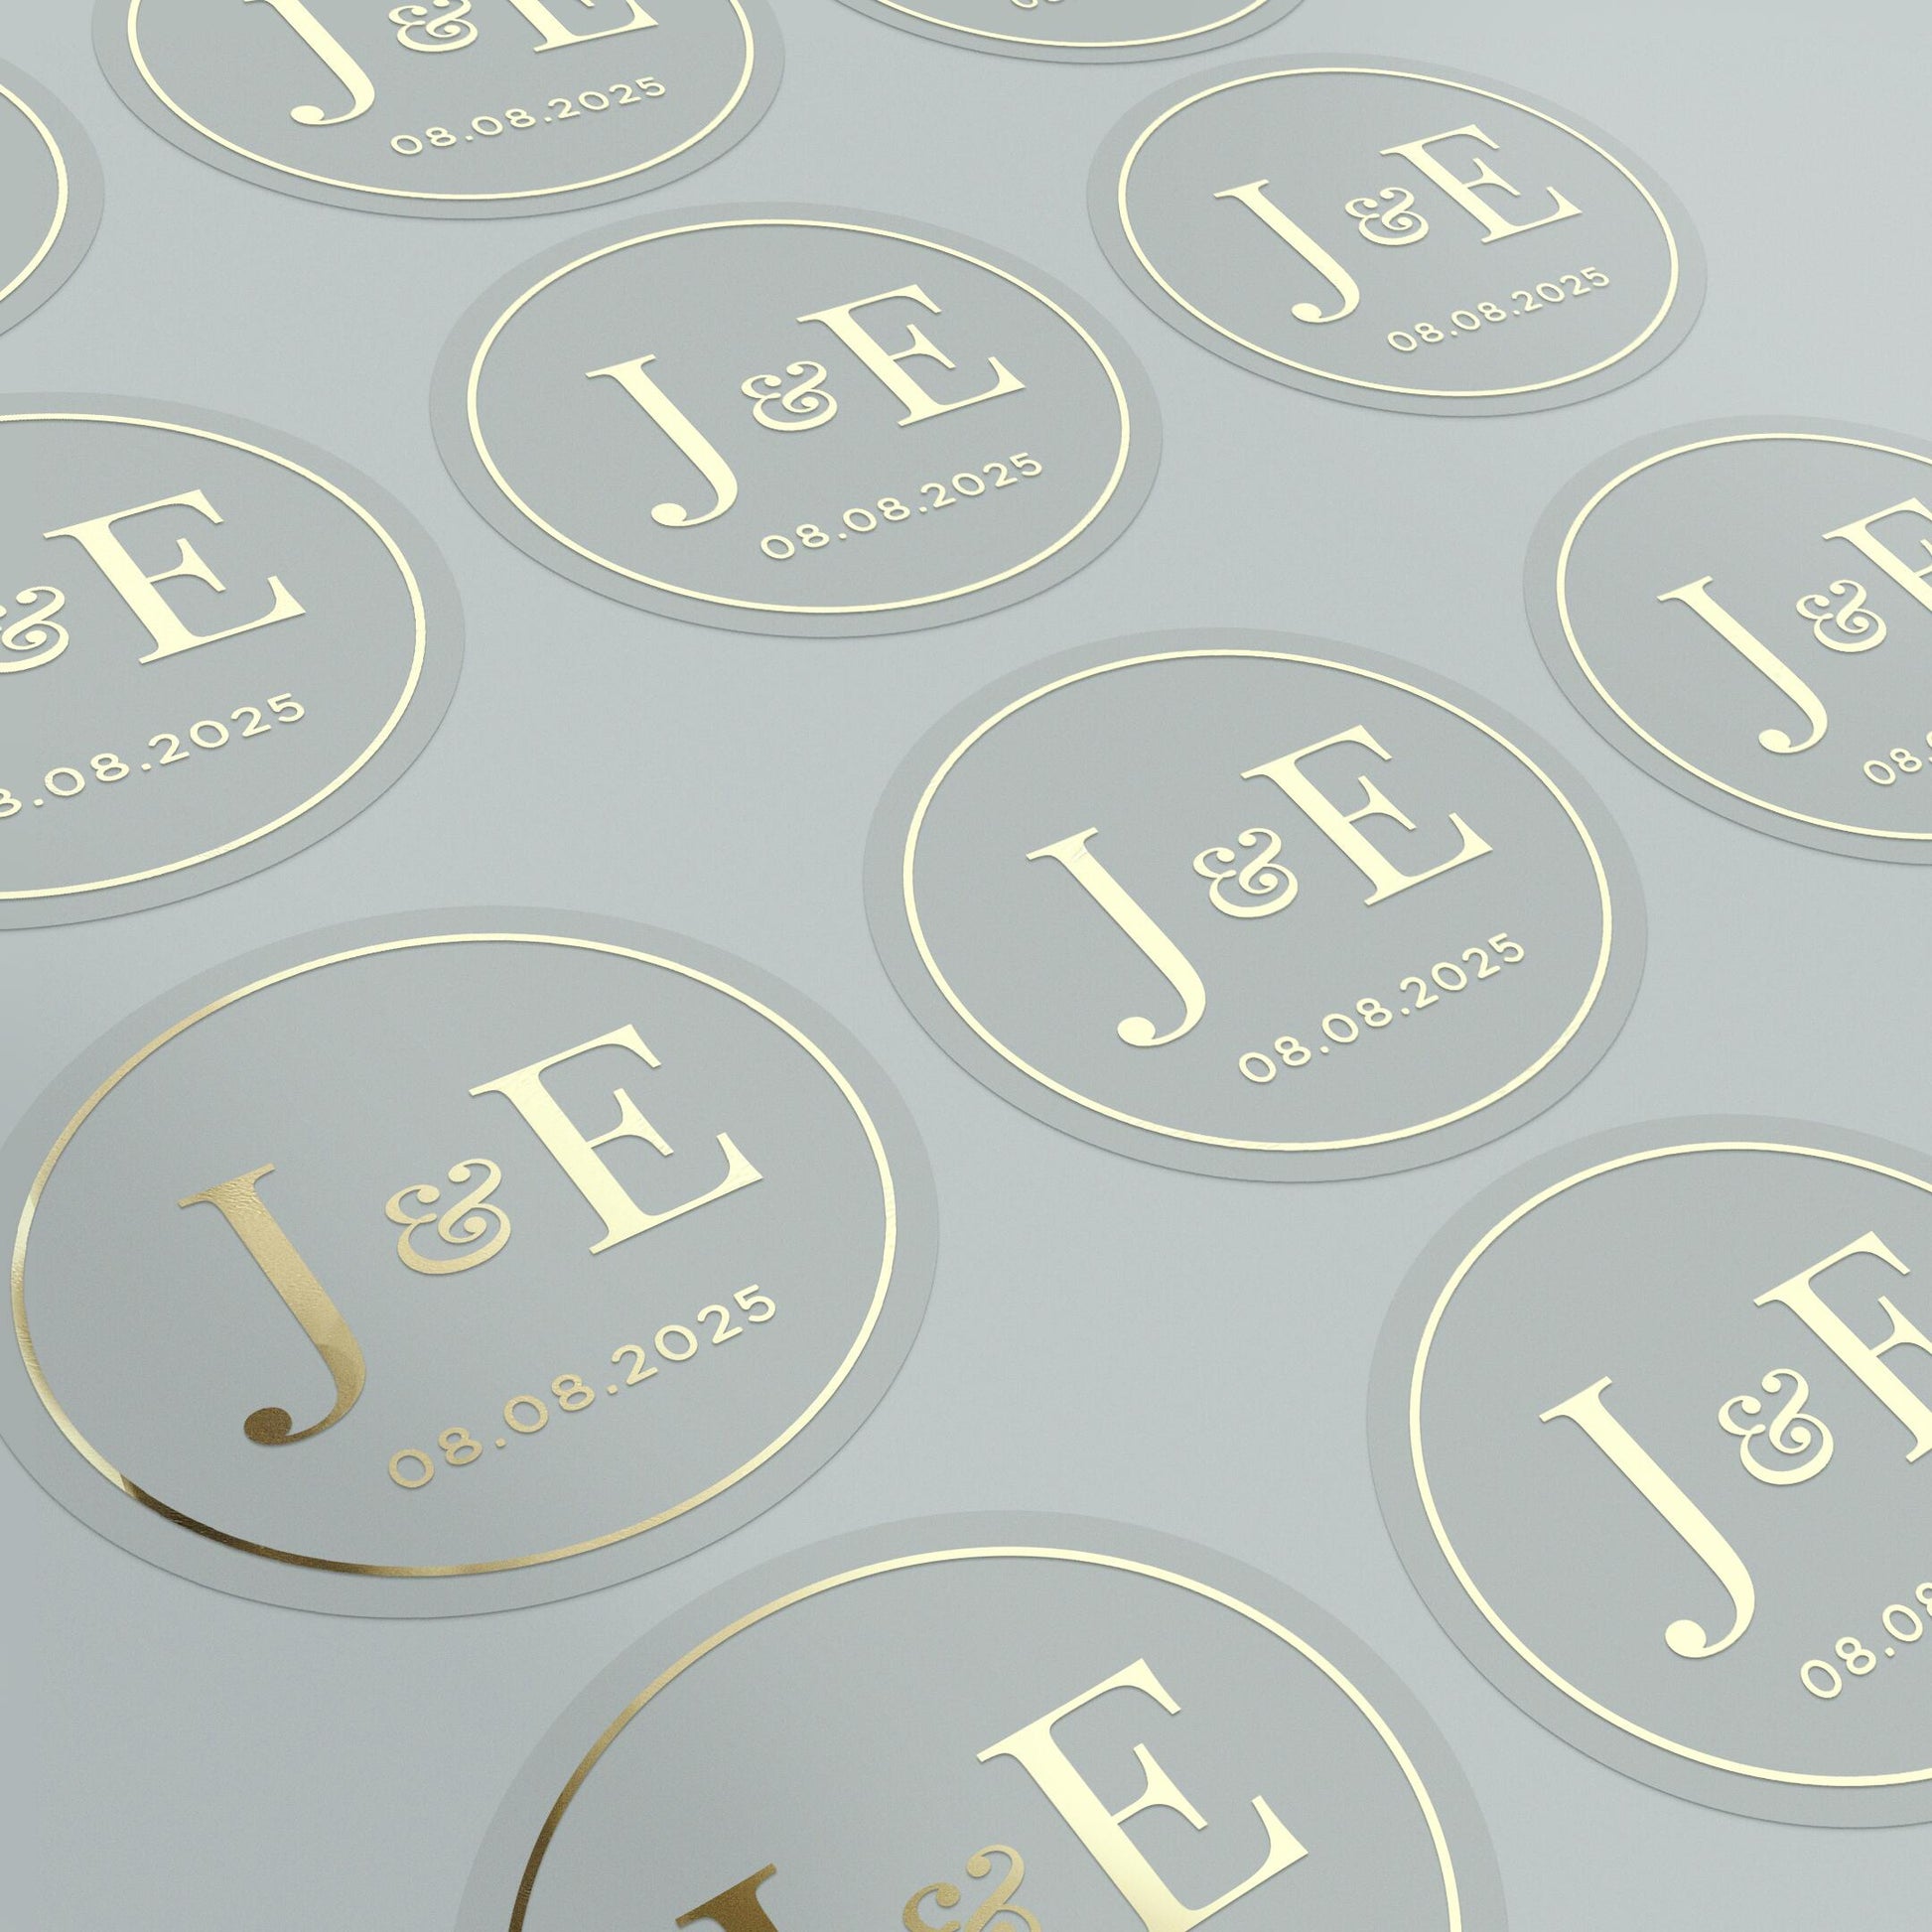 Elegant clear wedding sticker with monogram initials and custom wedding date. 